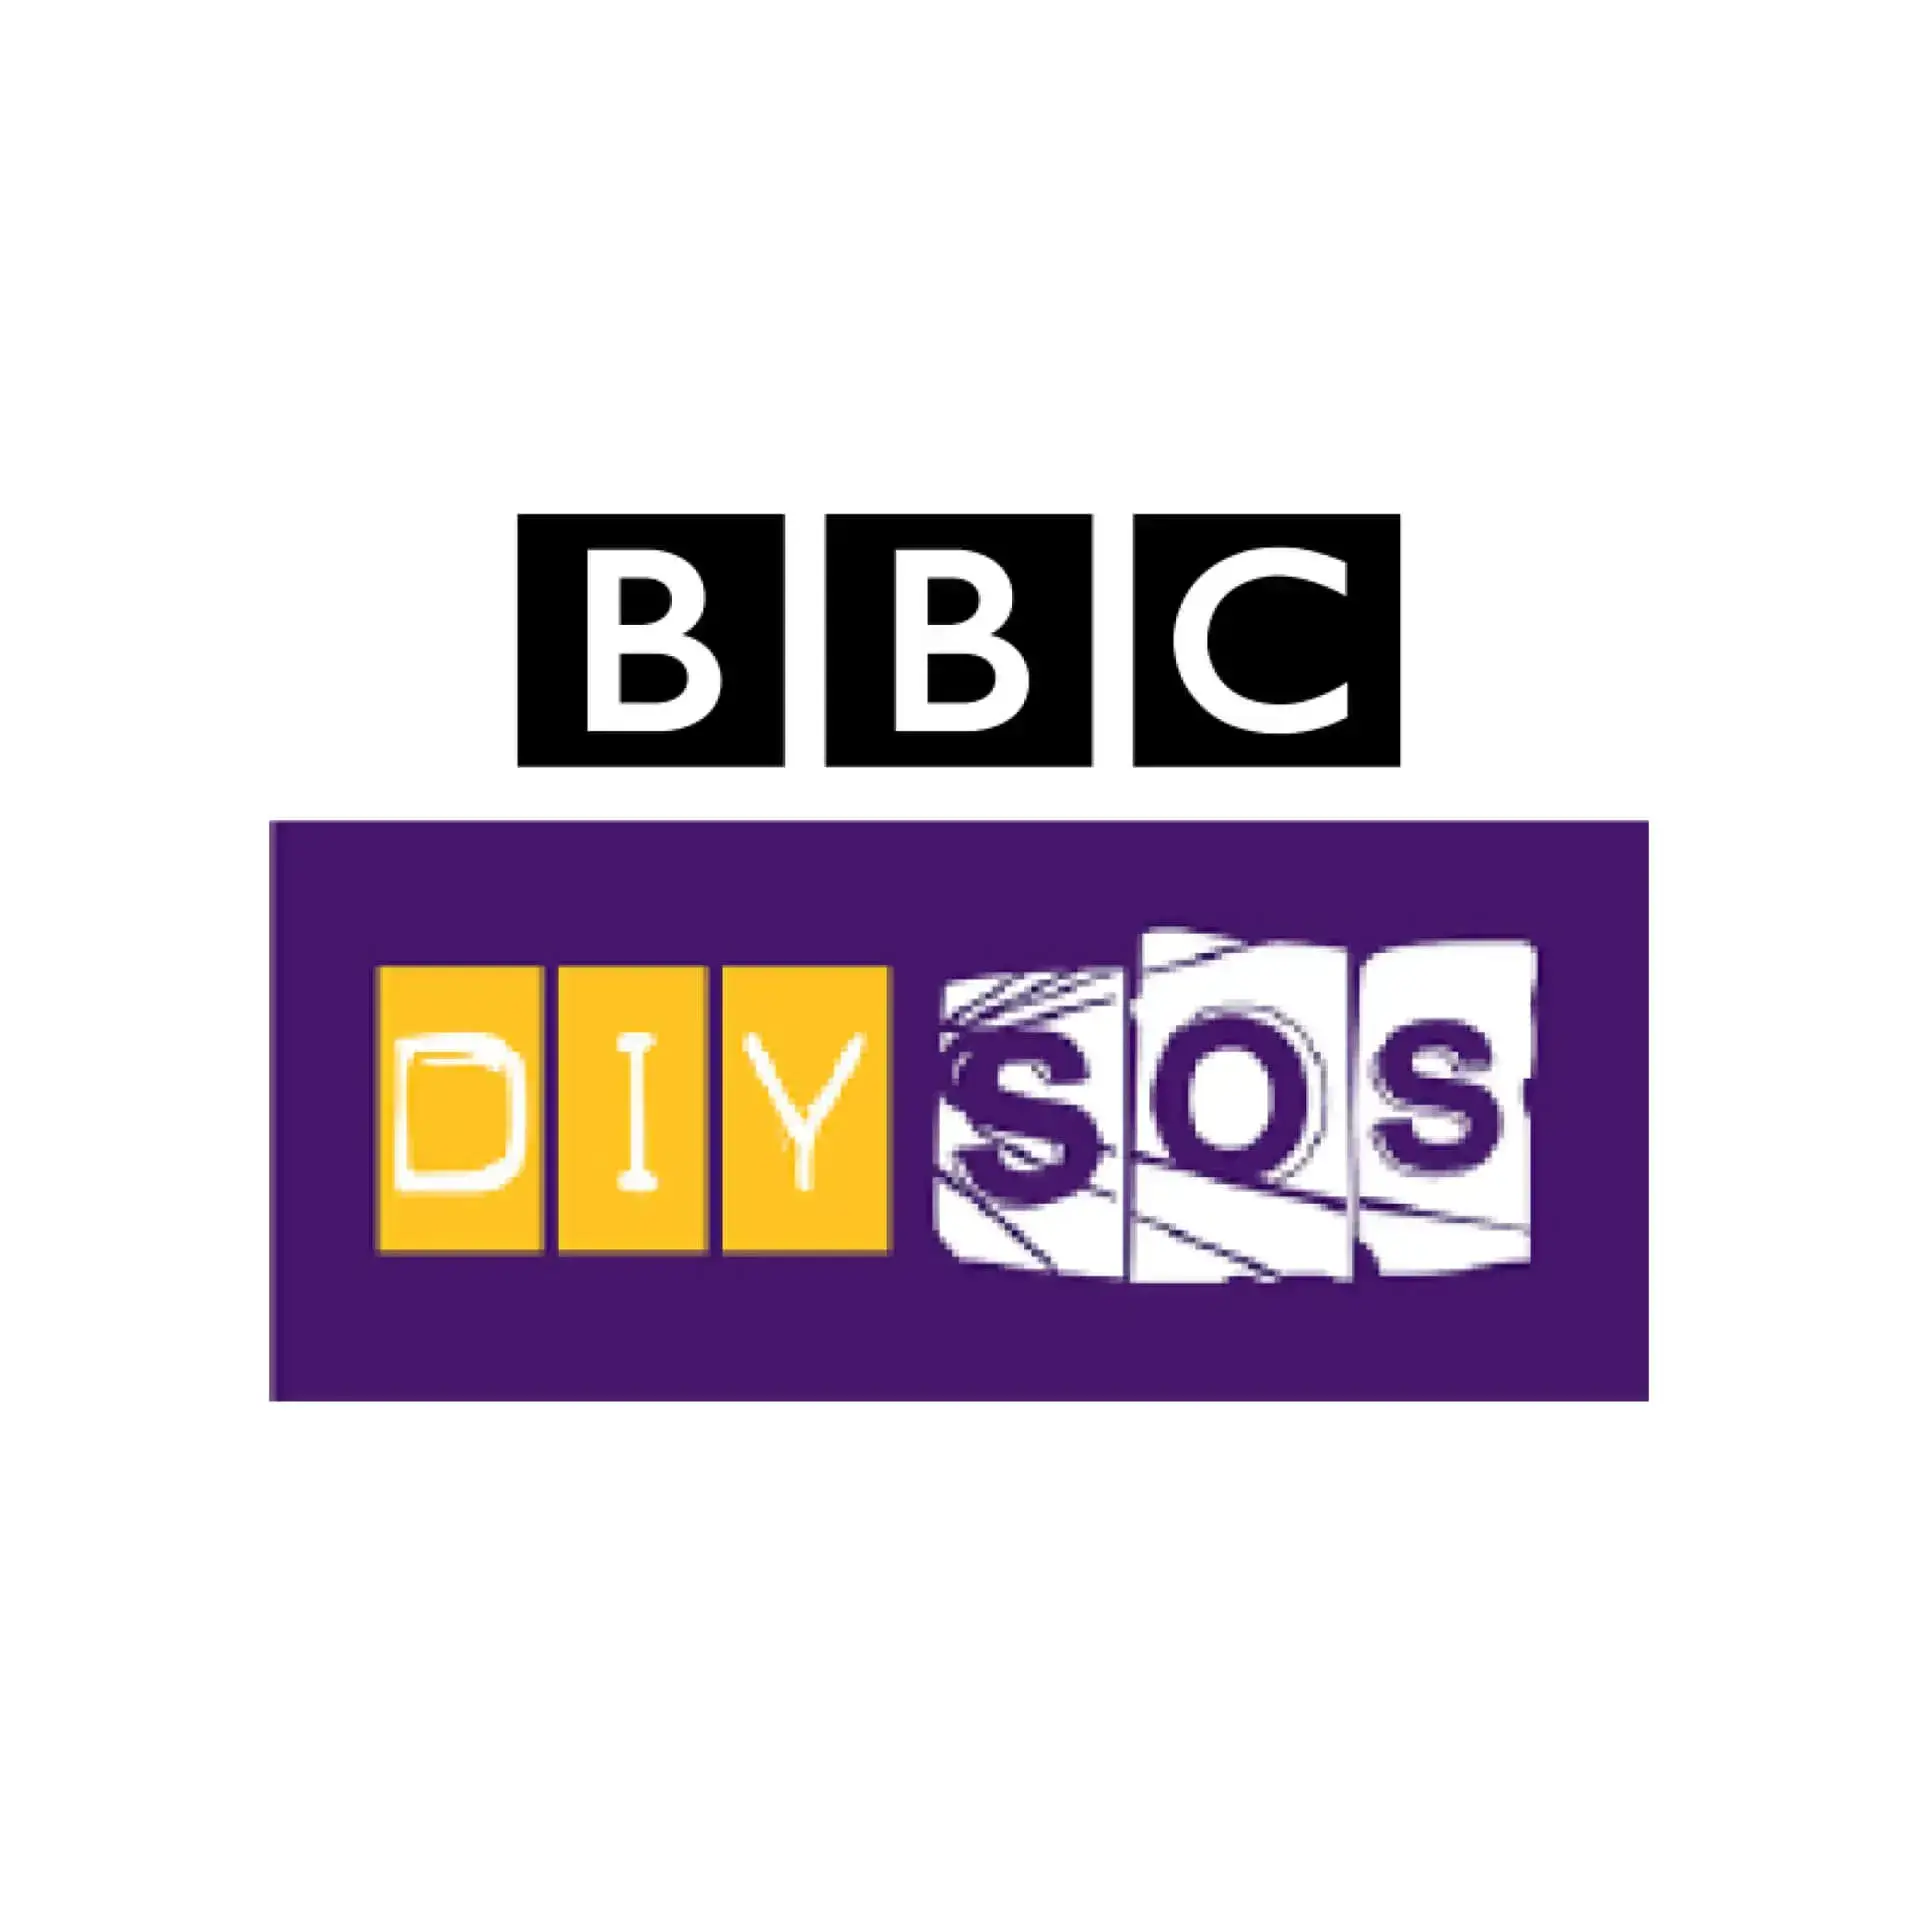 bbc-diy-sos